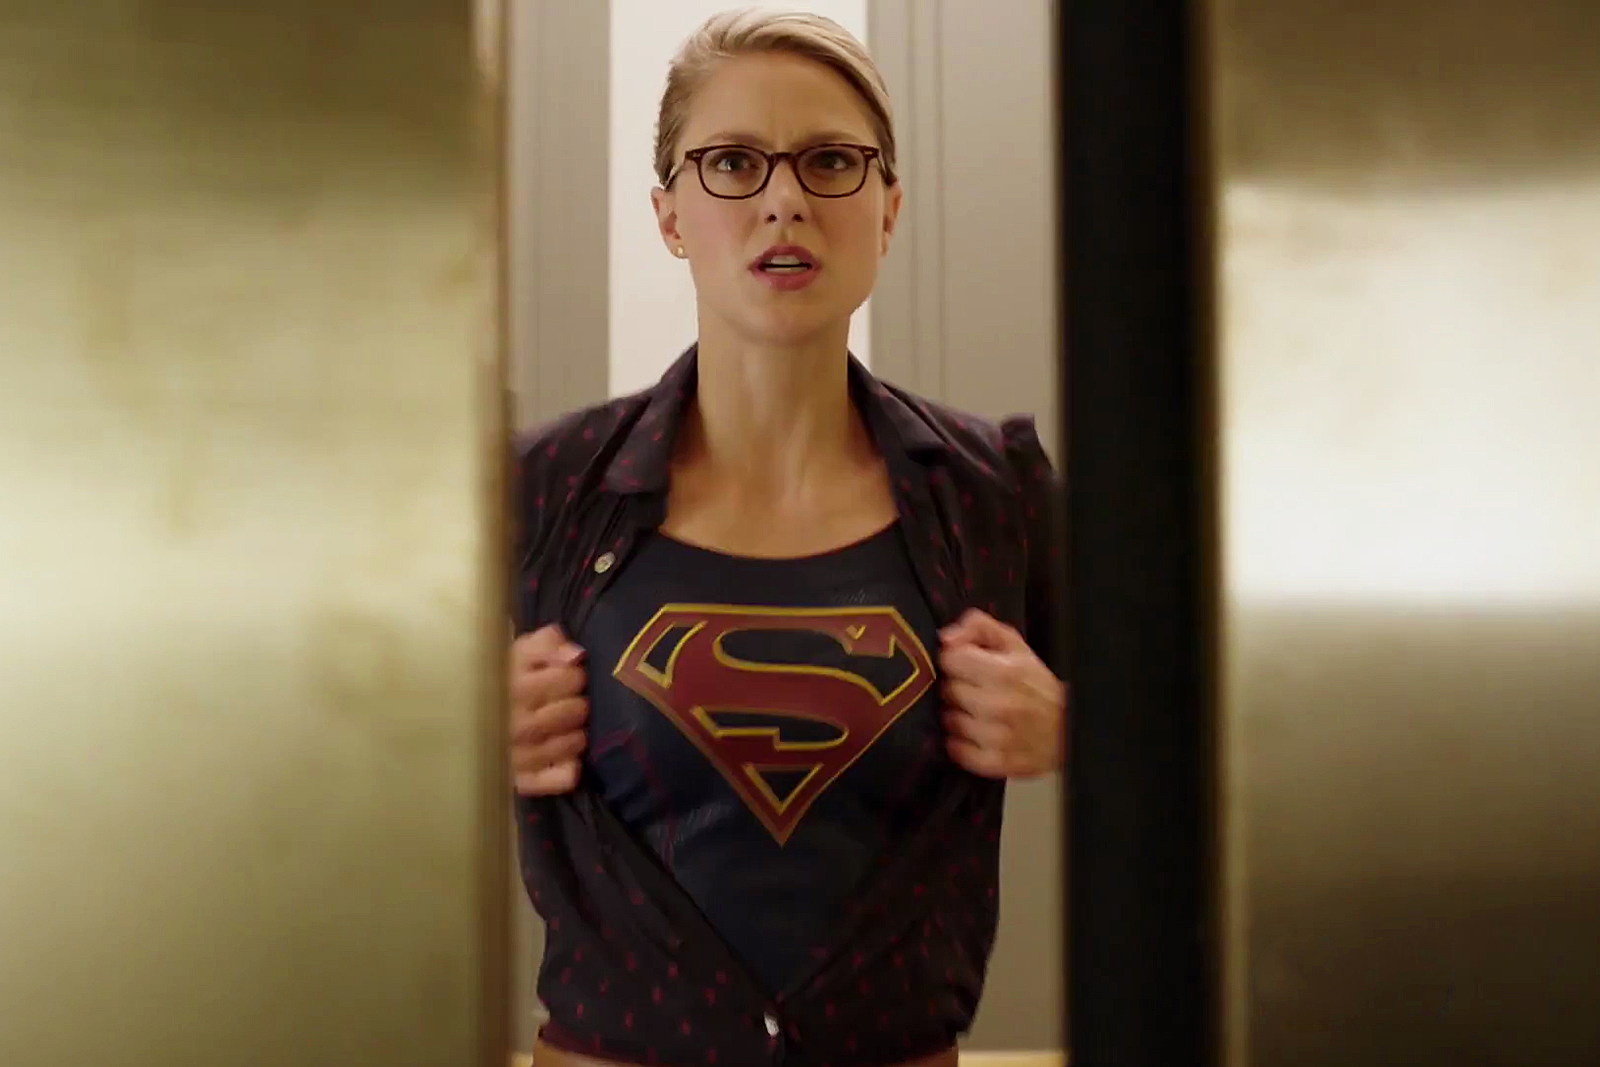 supergirl season 3 complete download kickass